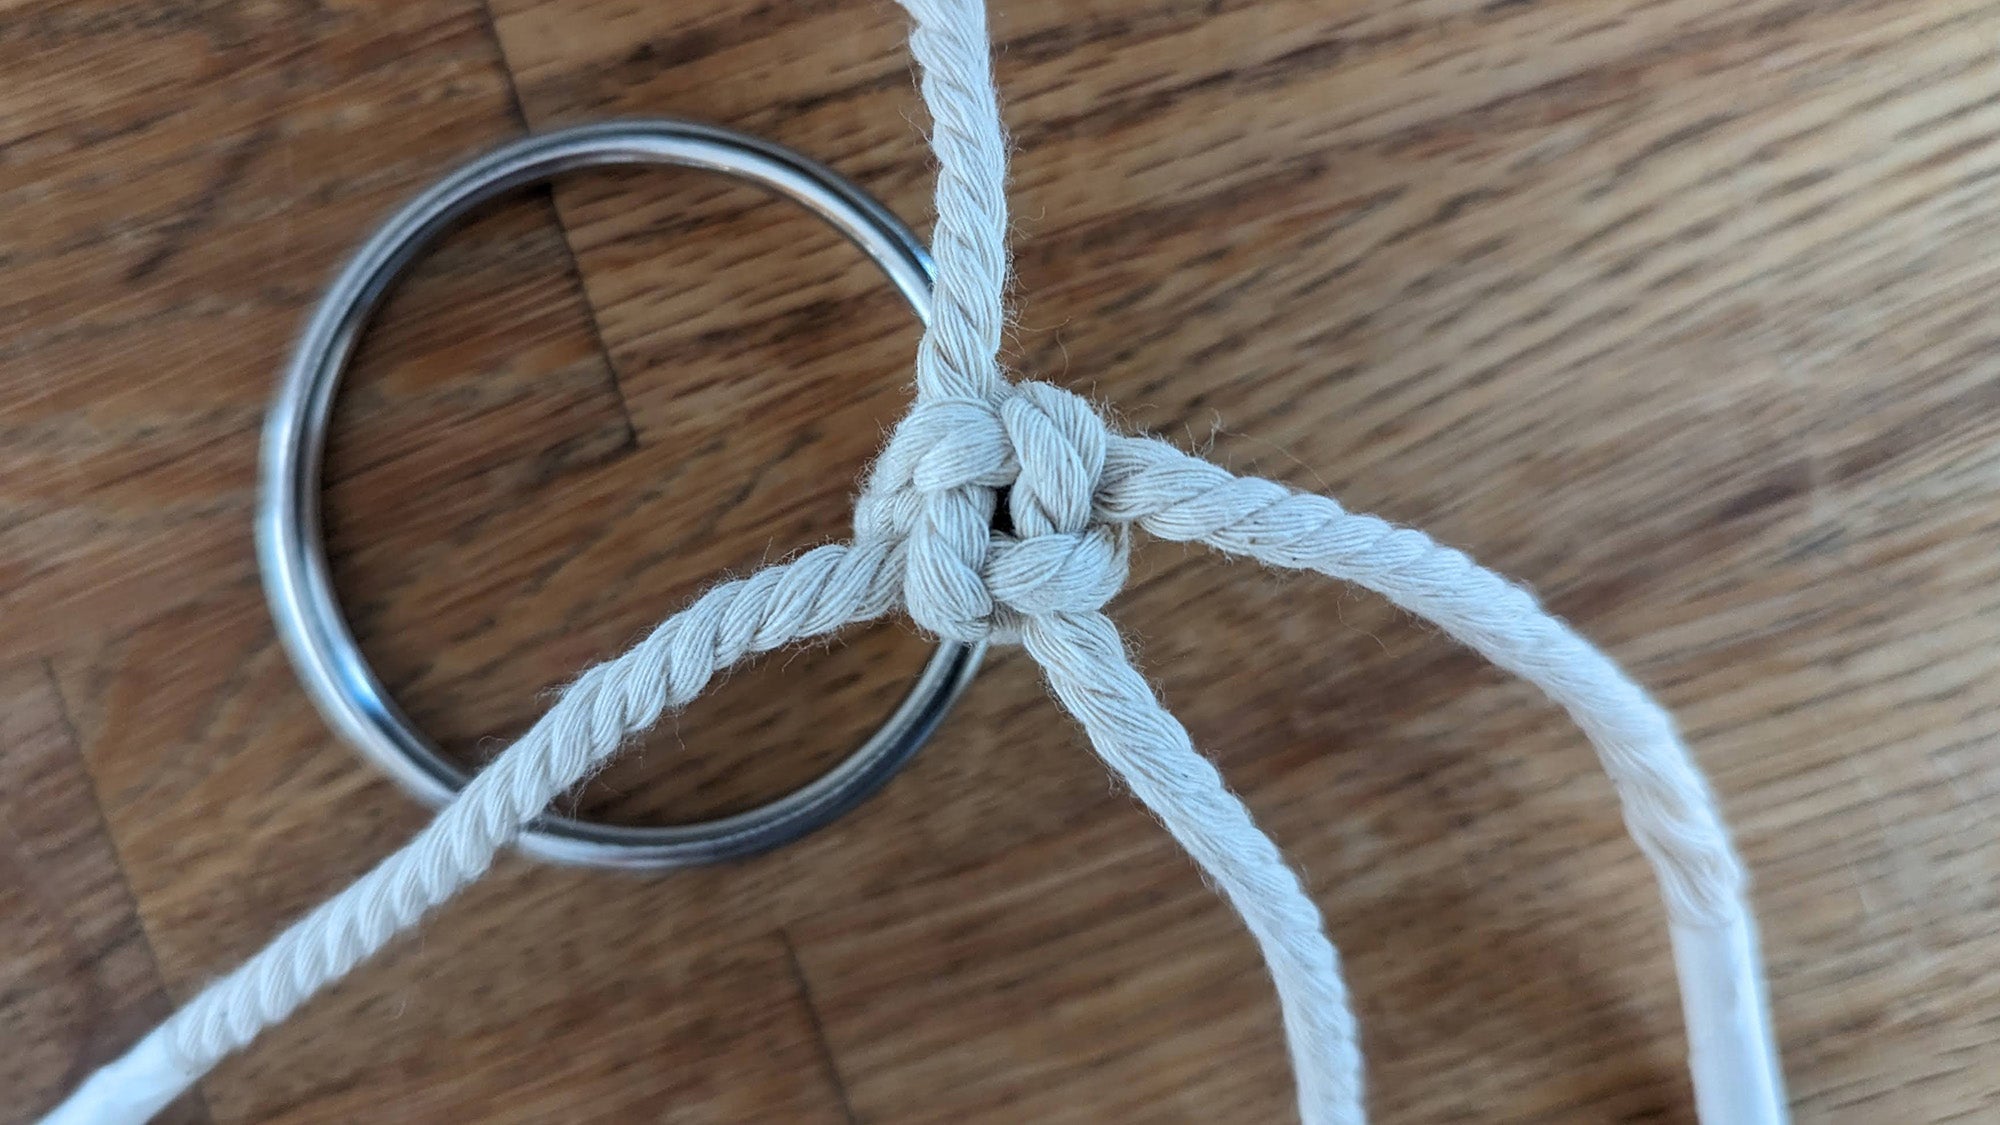 Finished box knot